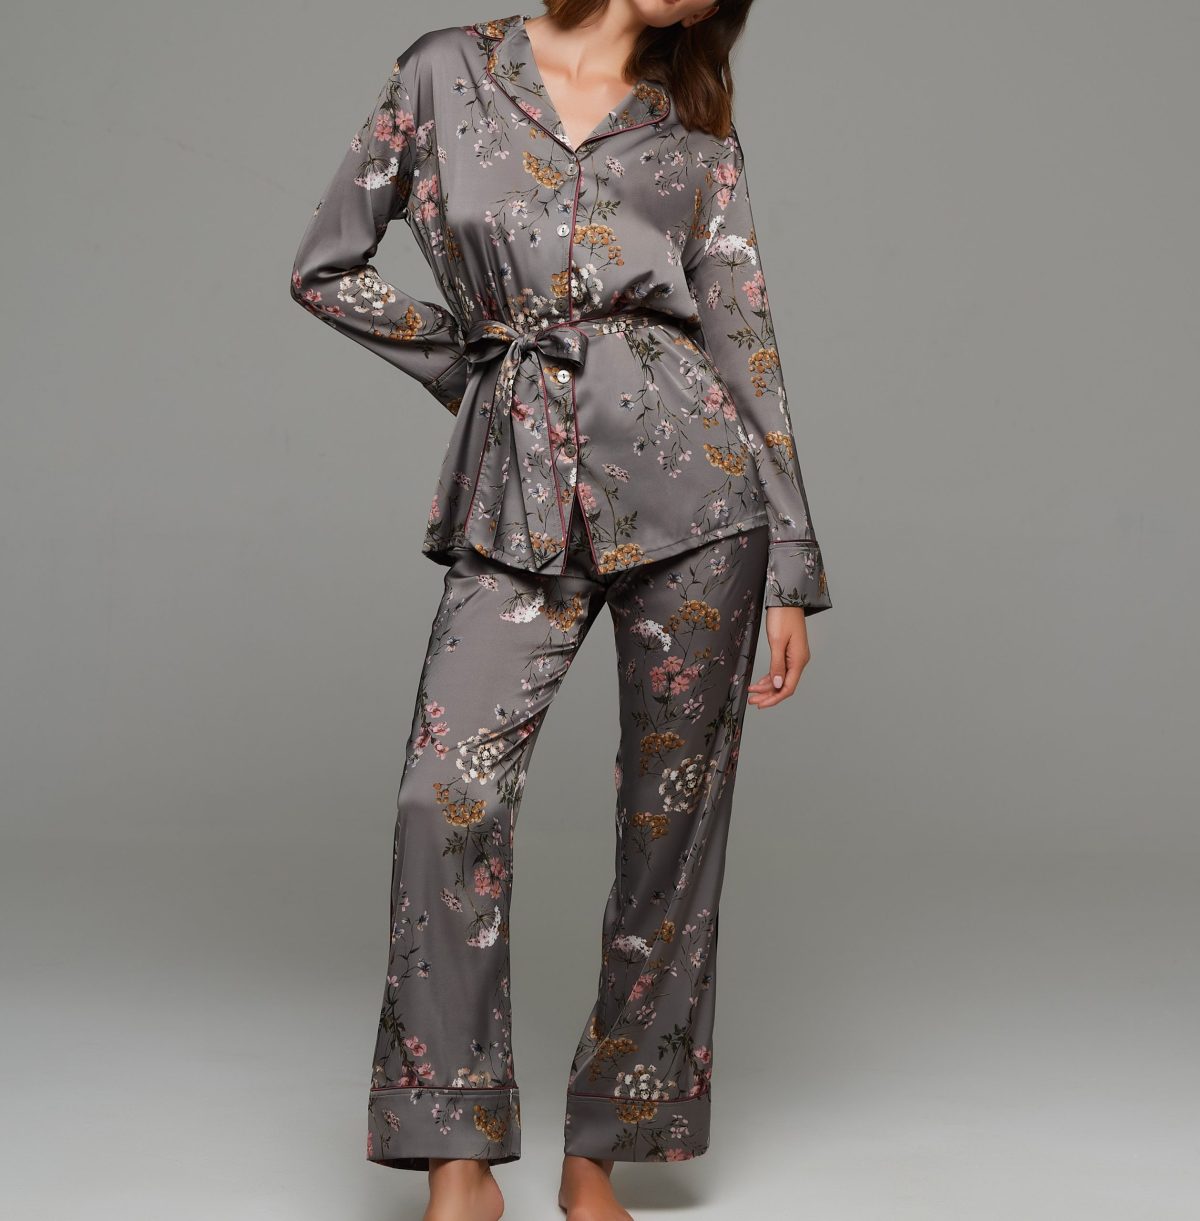 Satin Floral Pajamas Set (3179)